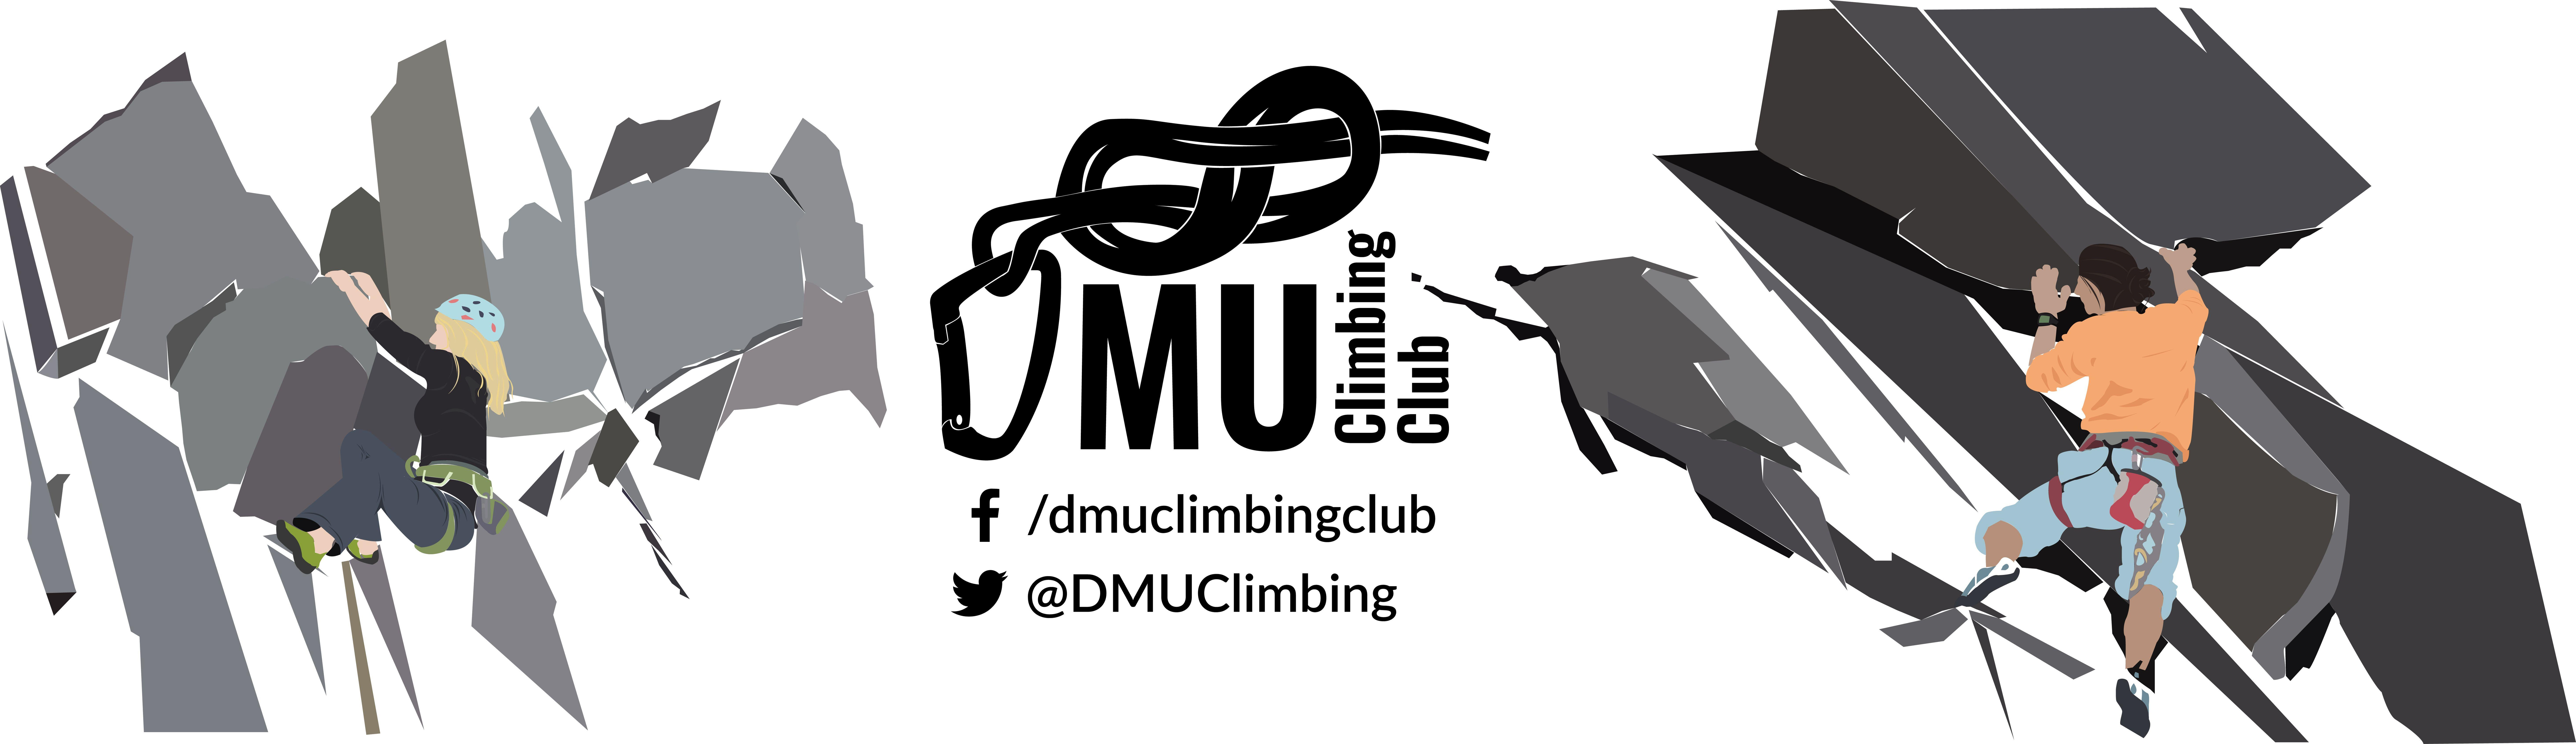 Climbing Logo - Climbing/Mountaineering